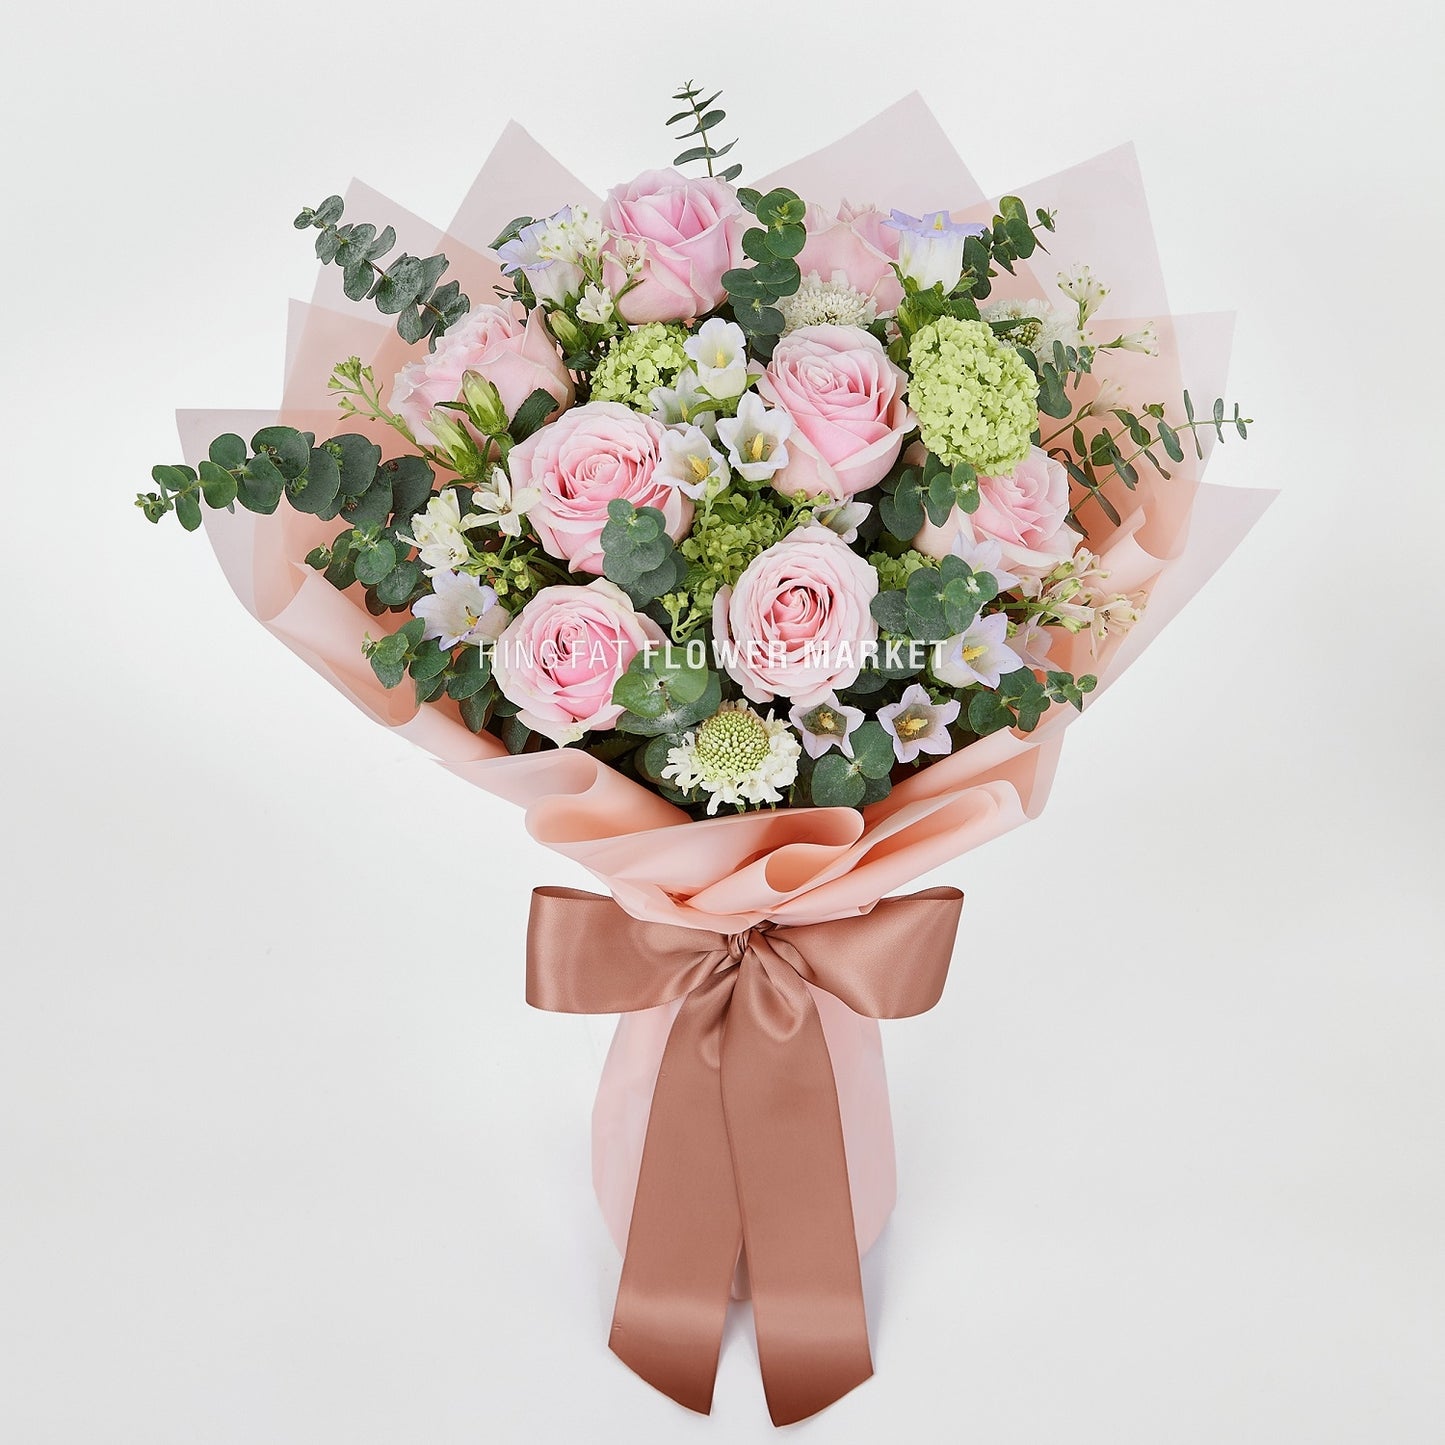 淺粉玫瑰風鈴花束 Pink rose and campanula bouquet